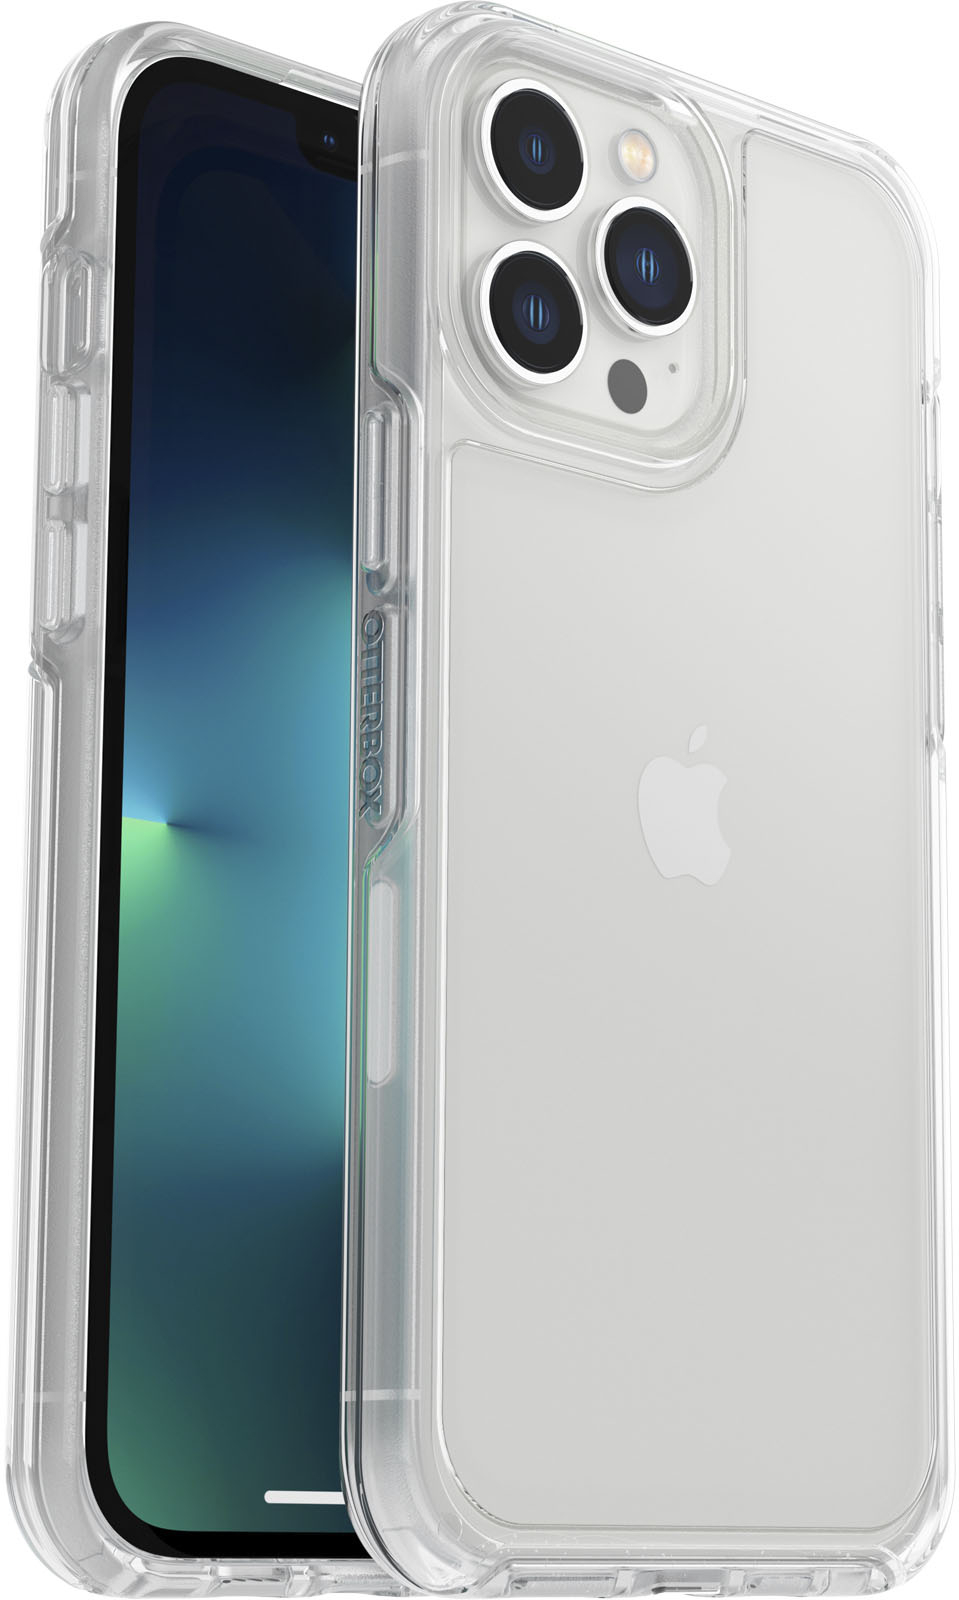 Angle View: Apple - iPhone 12 Pro Max 5G 128GB - Gold (Verizon)